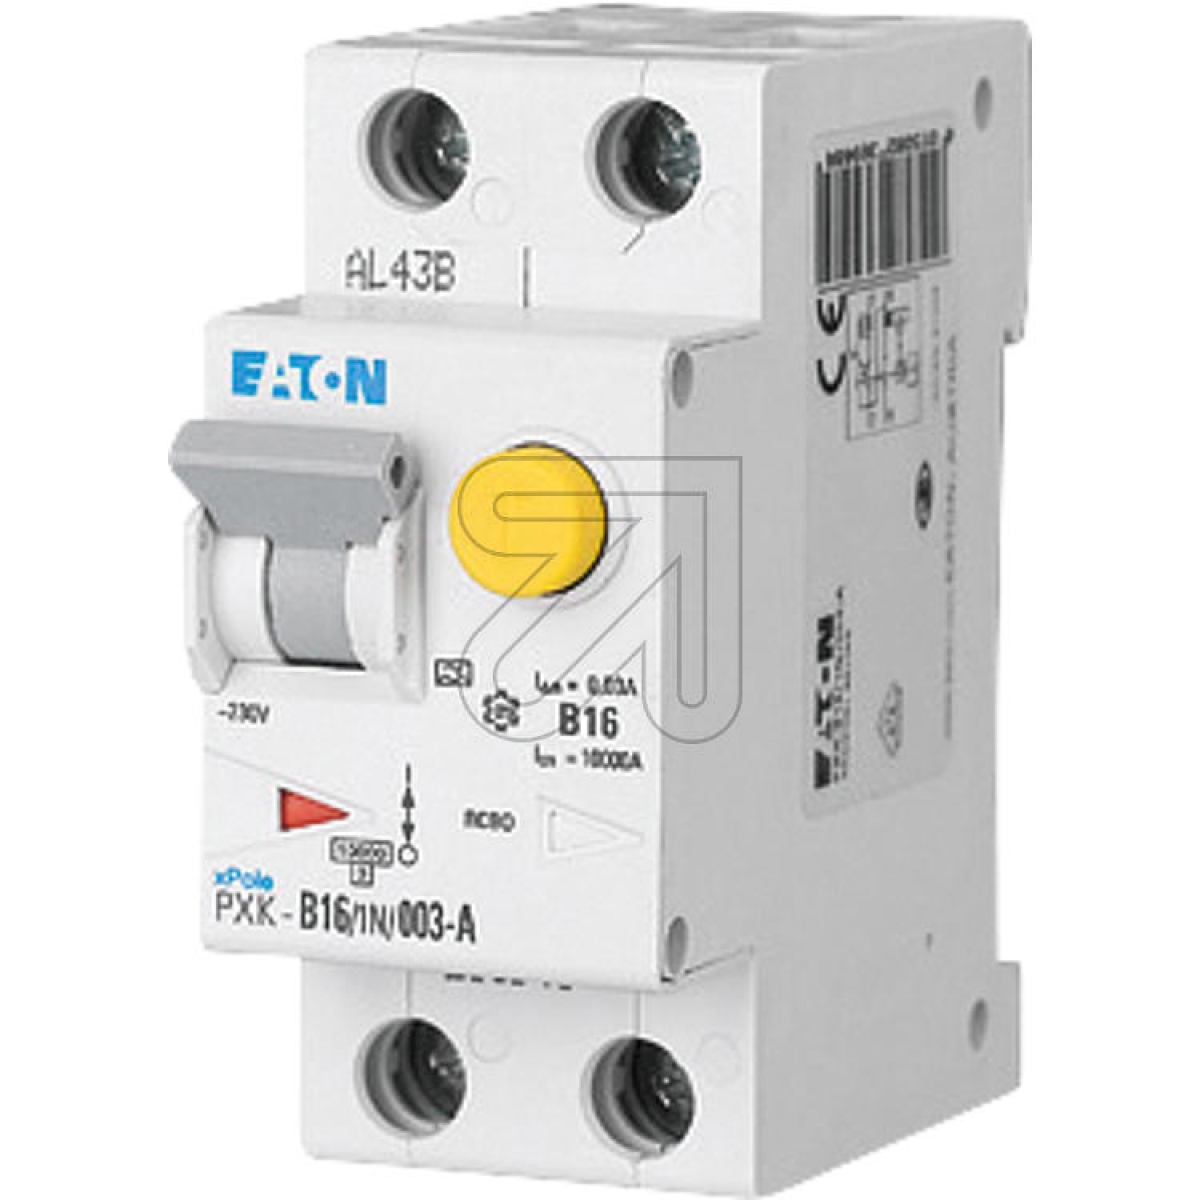 EATONFI/LS switch PXK-B16/1N/003-A 236948Article-No: 181365